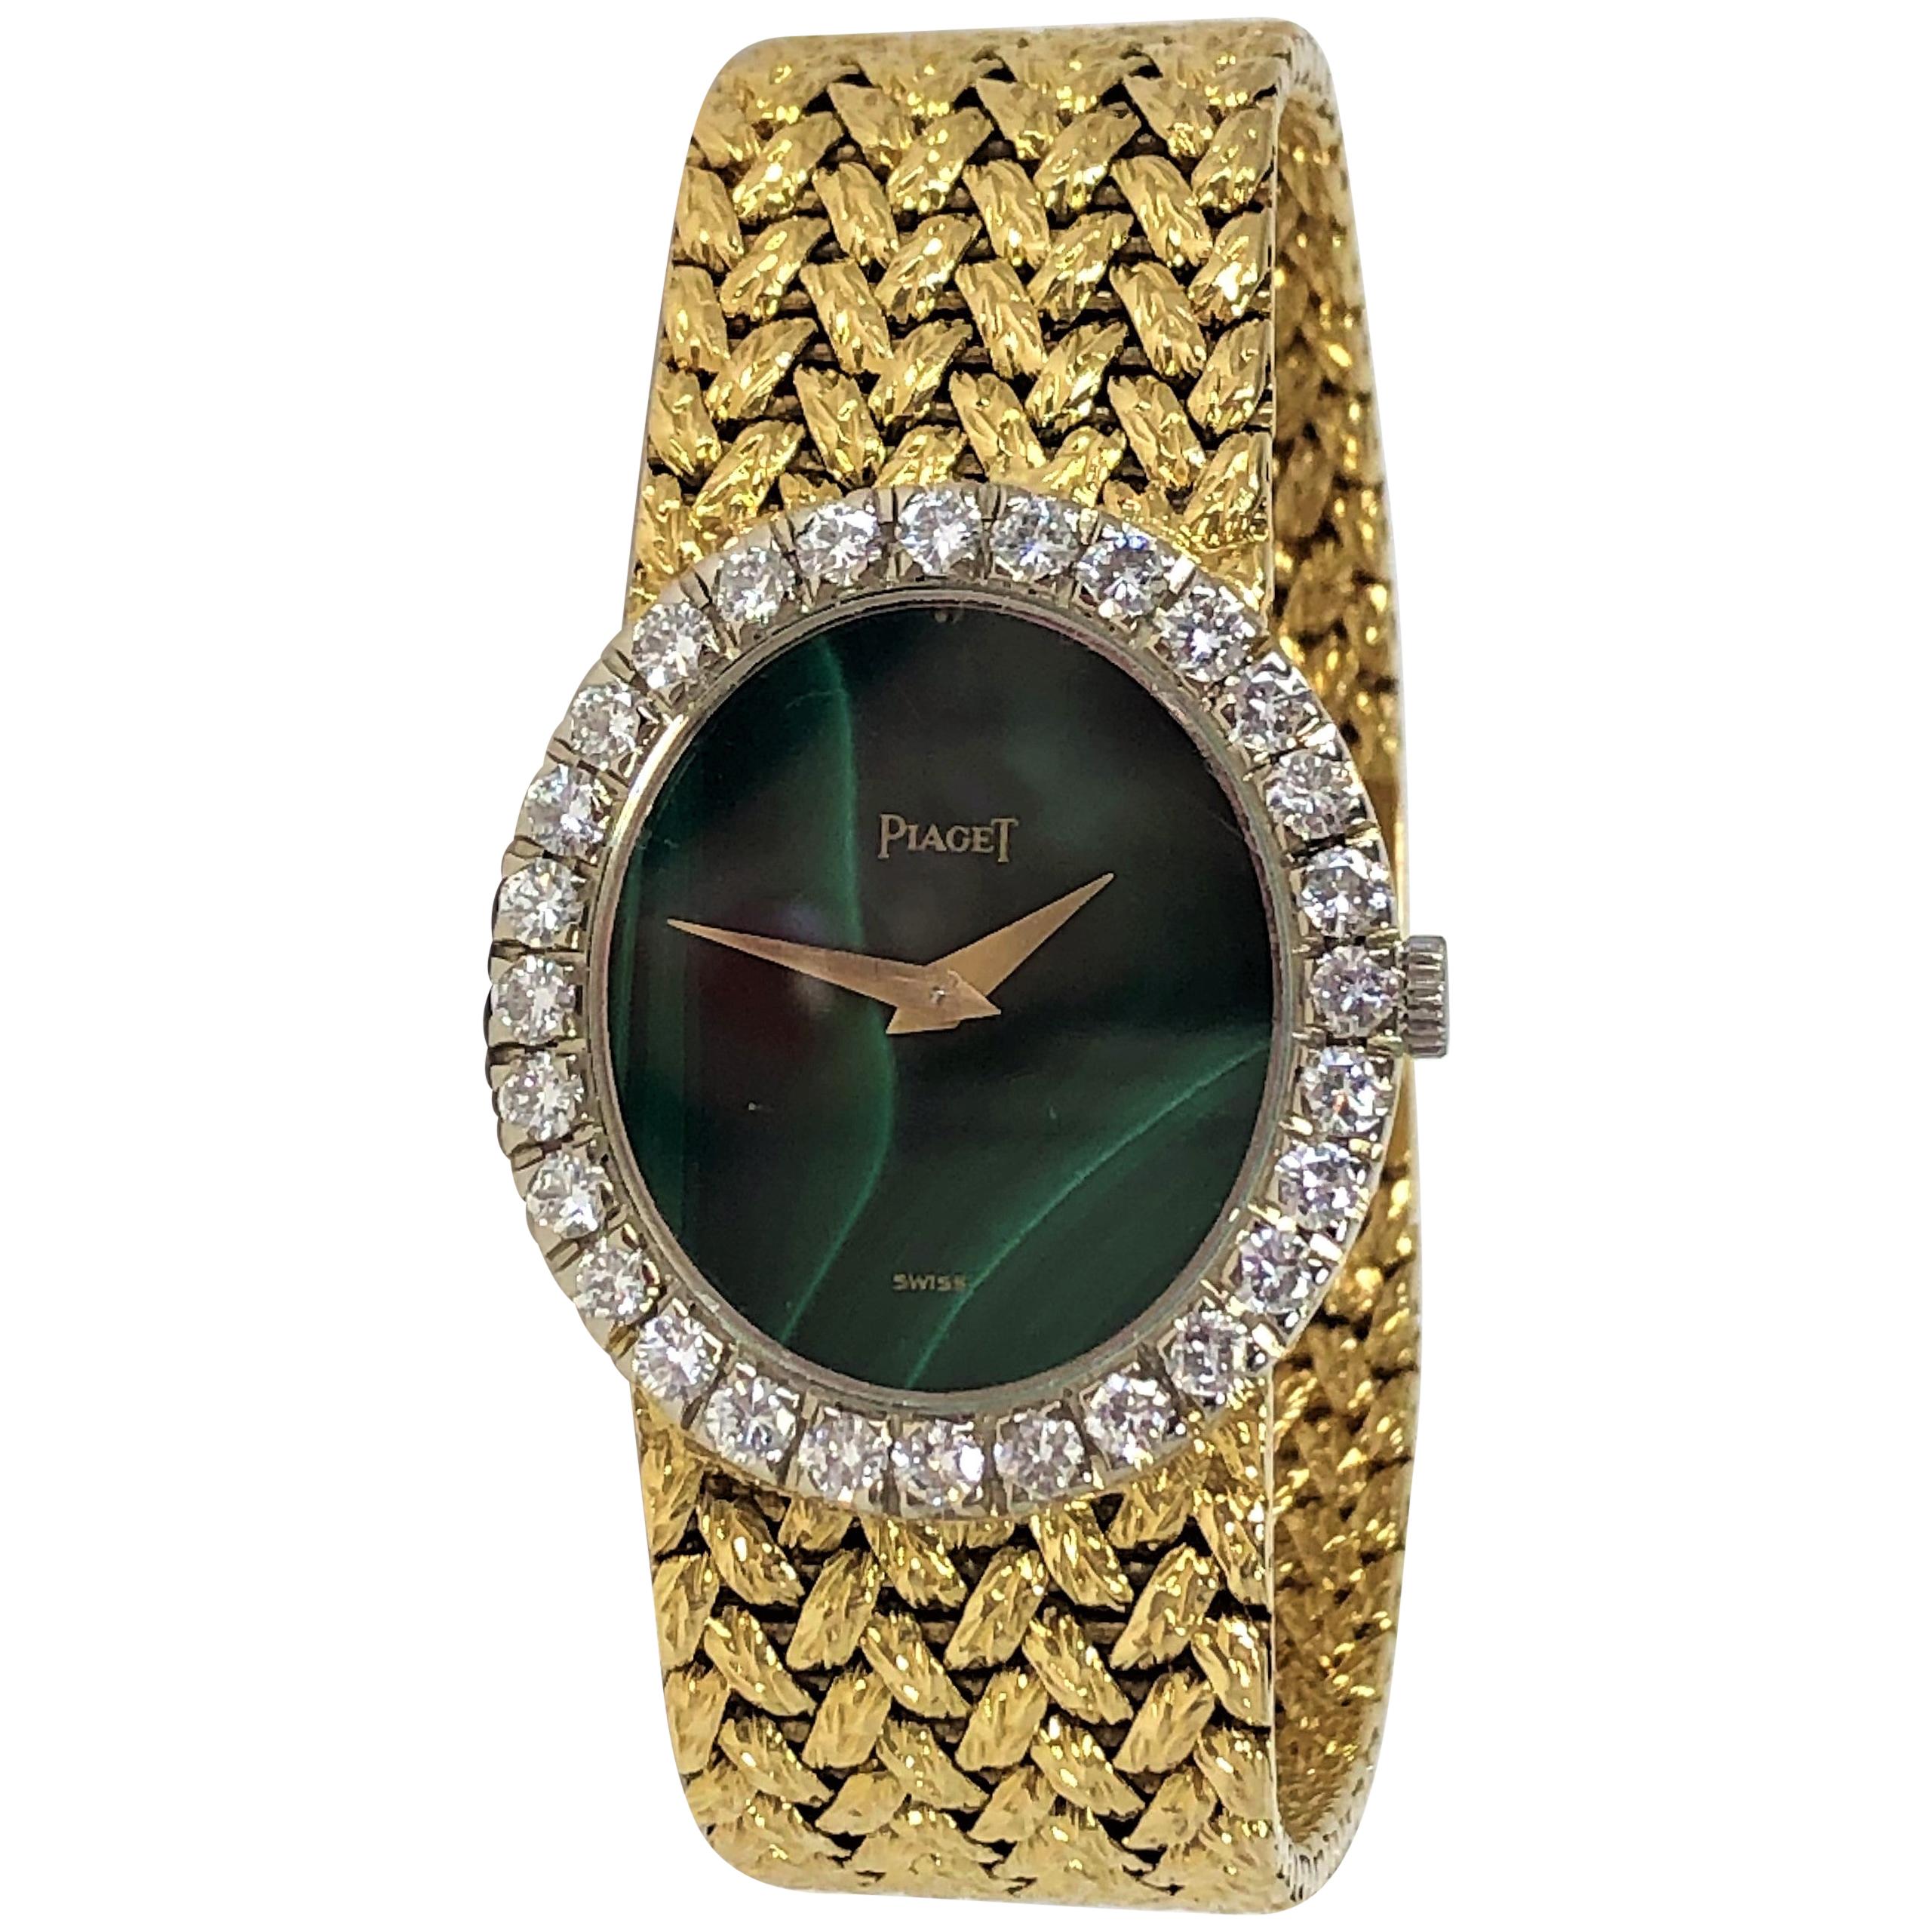 Piaget Vintage Green Malachite Dial Ladies Watch Retailed by Van Cleef & Arpels